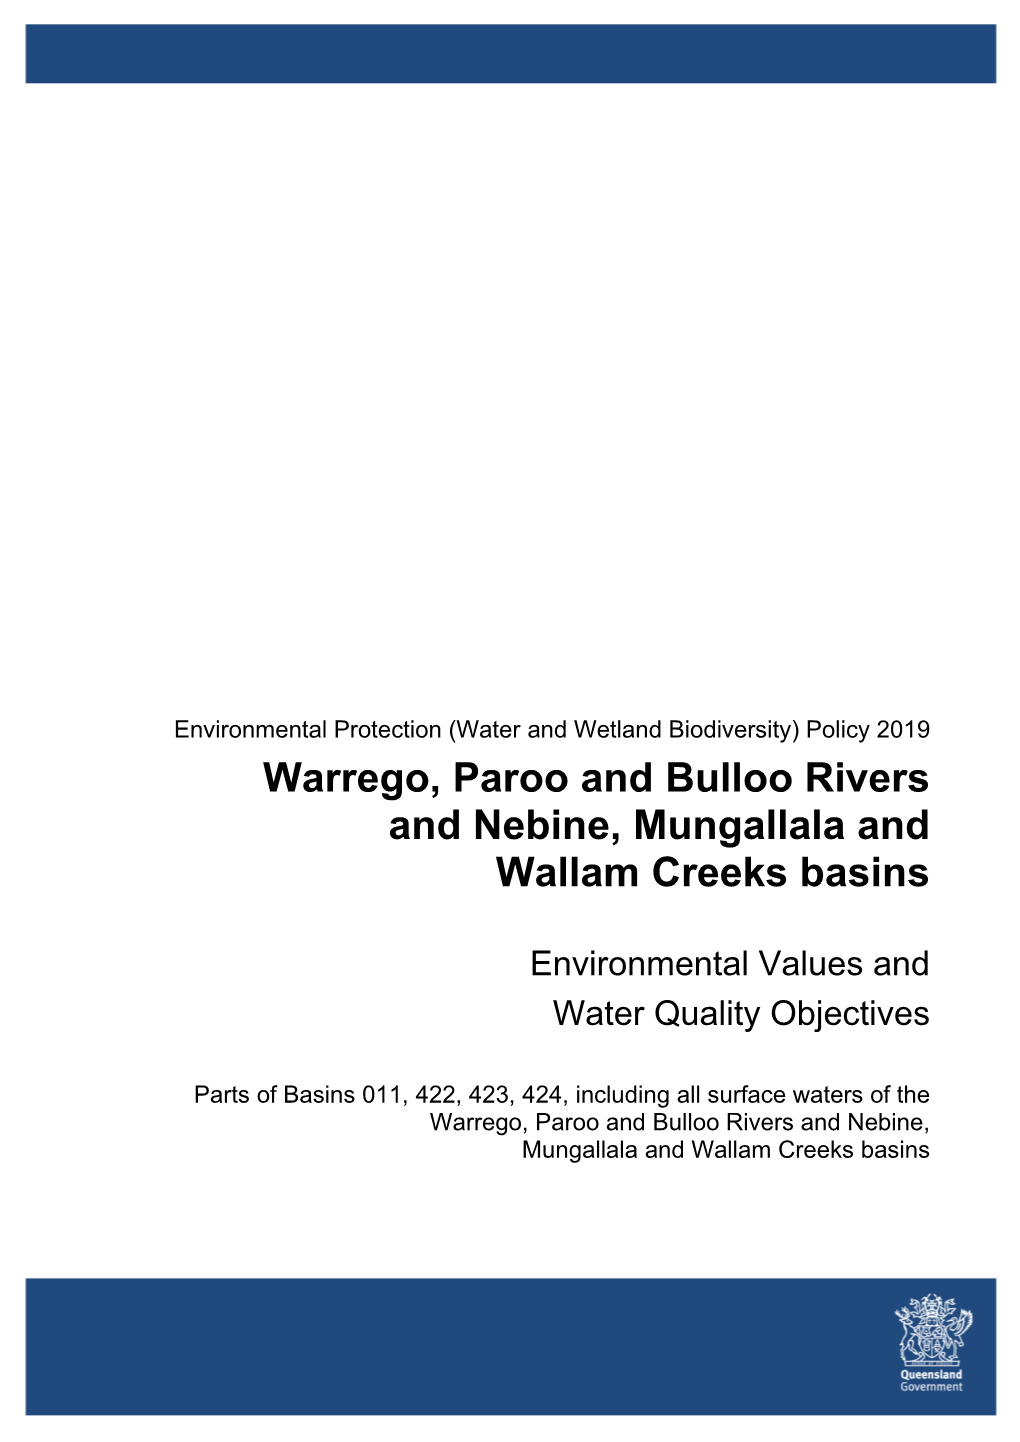 Warrego, Paroo and Bulloo Rivers and Nebine, Mungallala and Wallam Creeks Basins